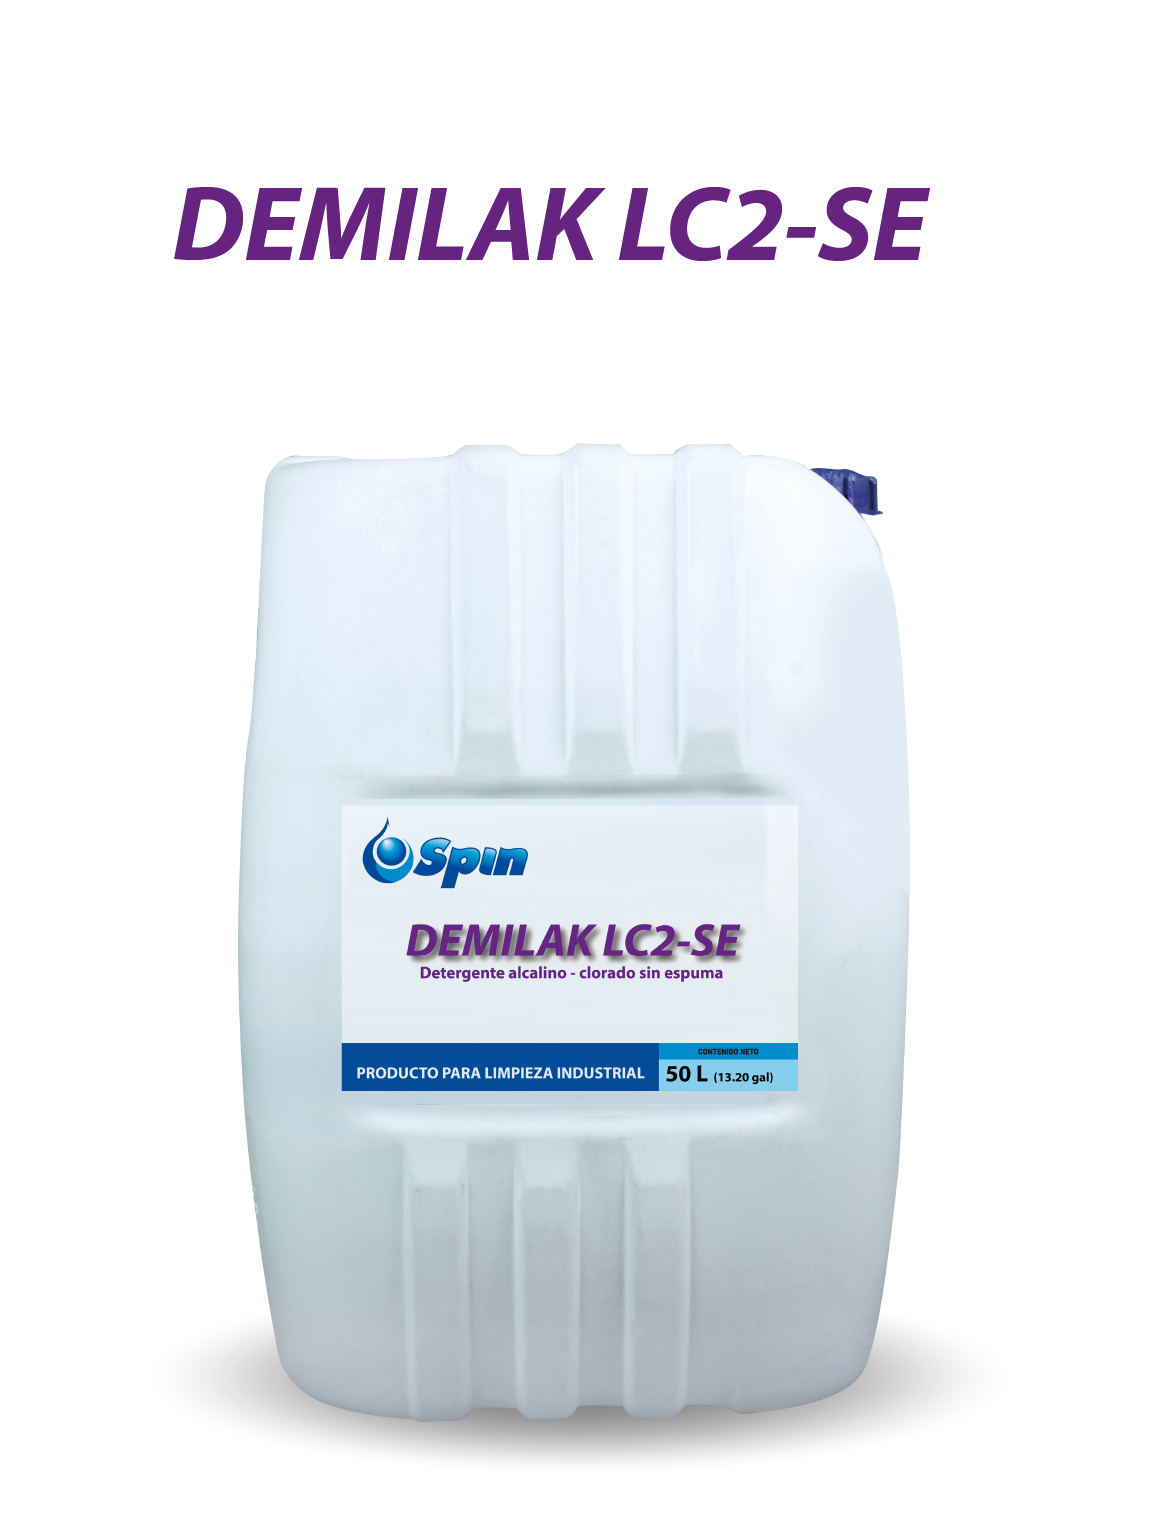 DEMILAK LC2-SE